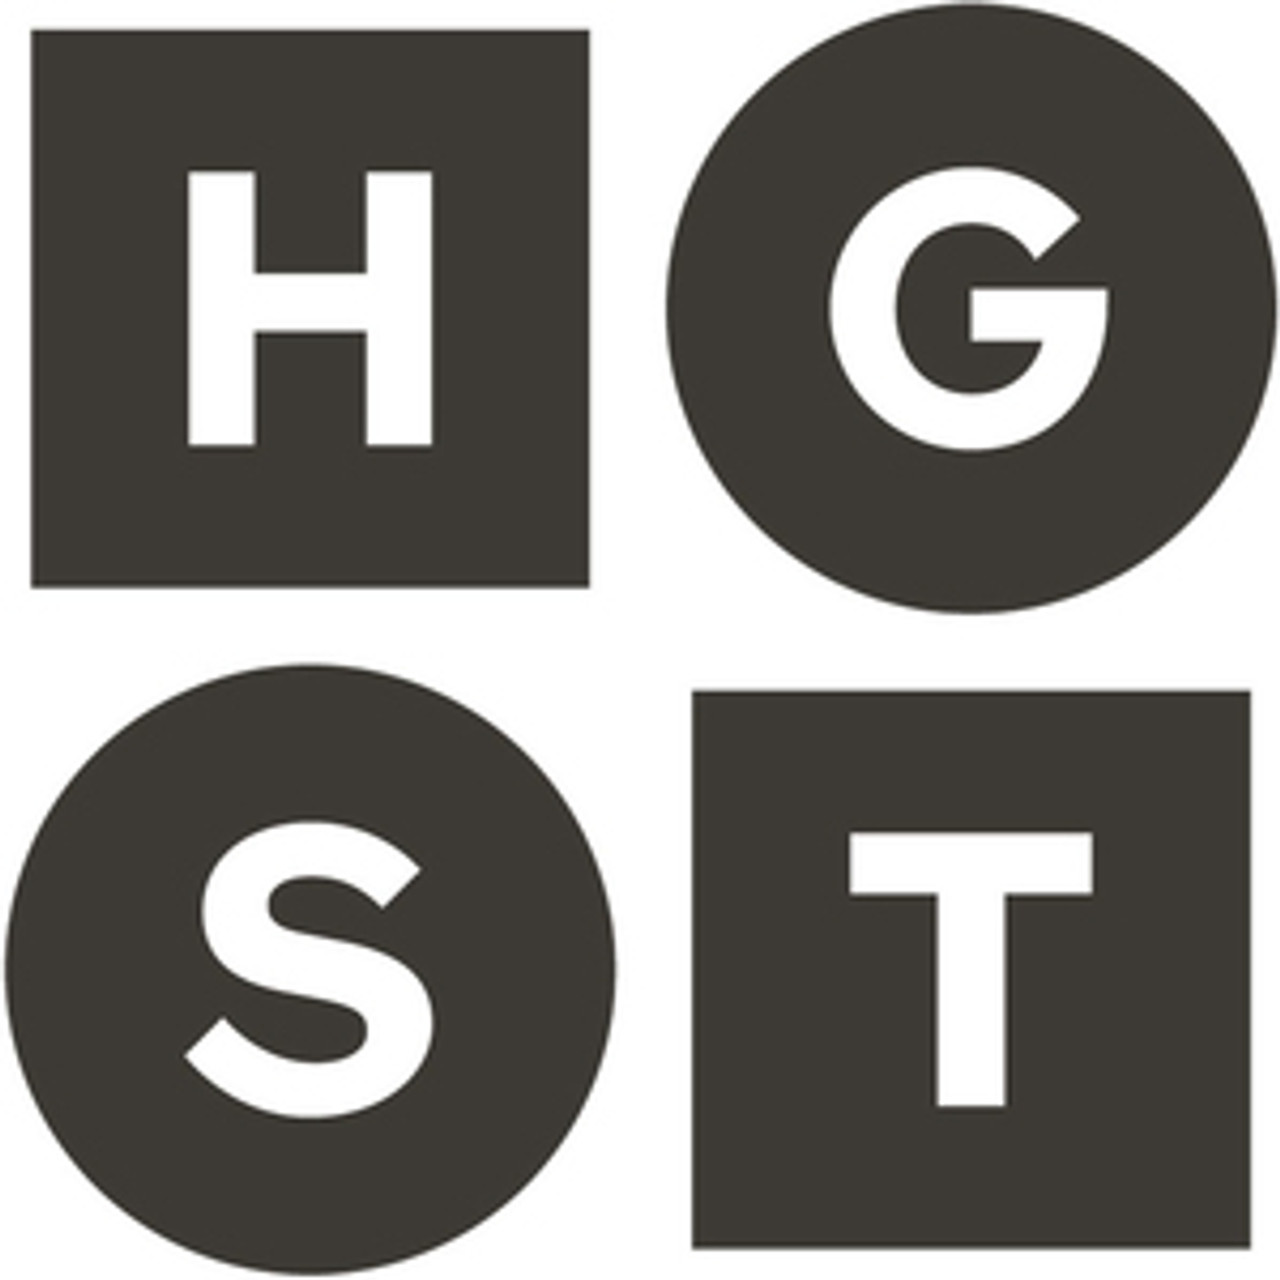 HGST Ultrastar He10 HUH721010AL4201 10 TB Hard Drive - 3.5" Internal - SAS (12Gb/s SAS)